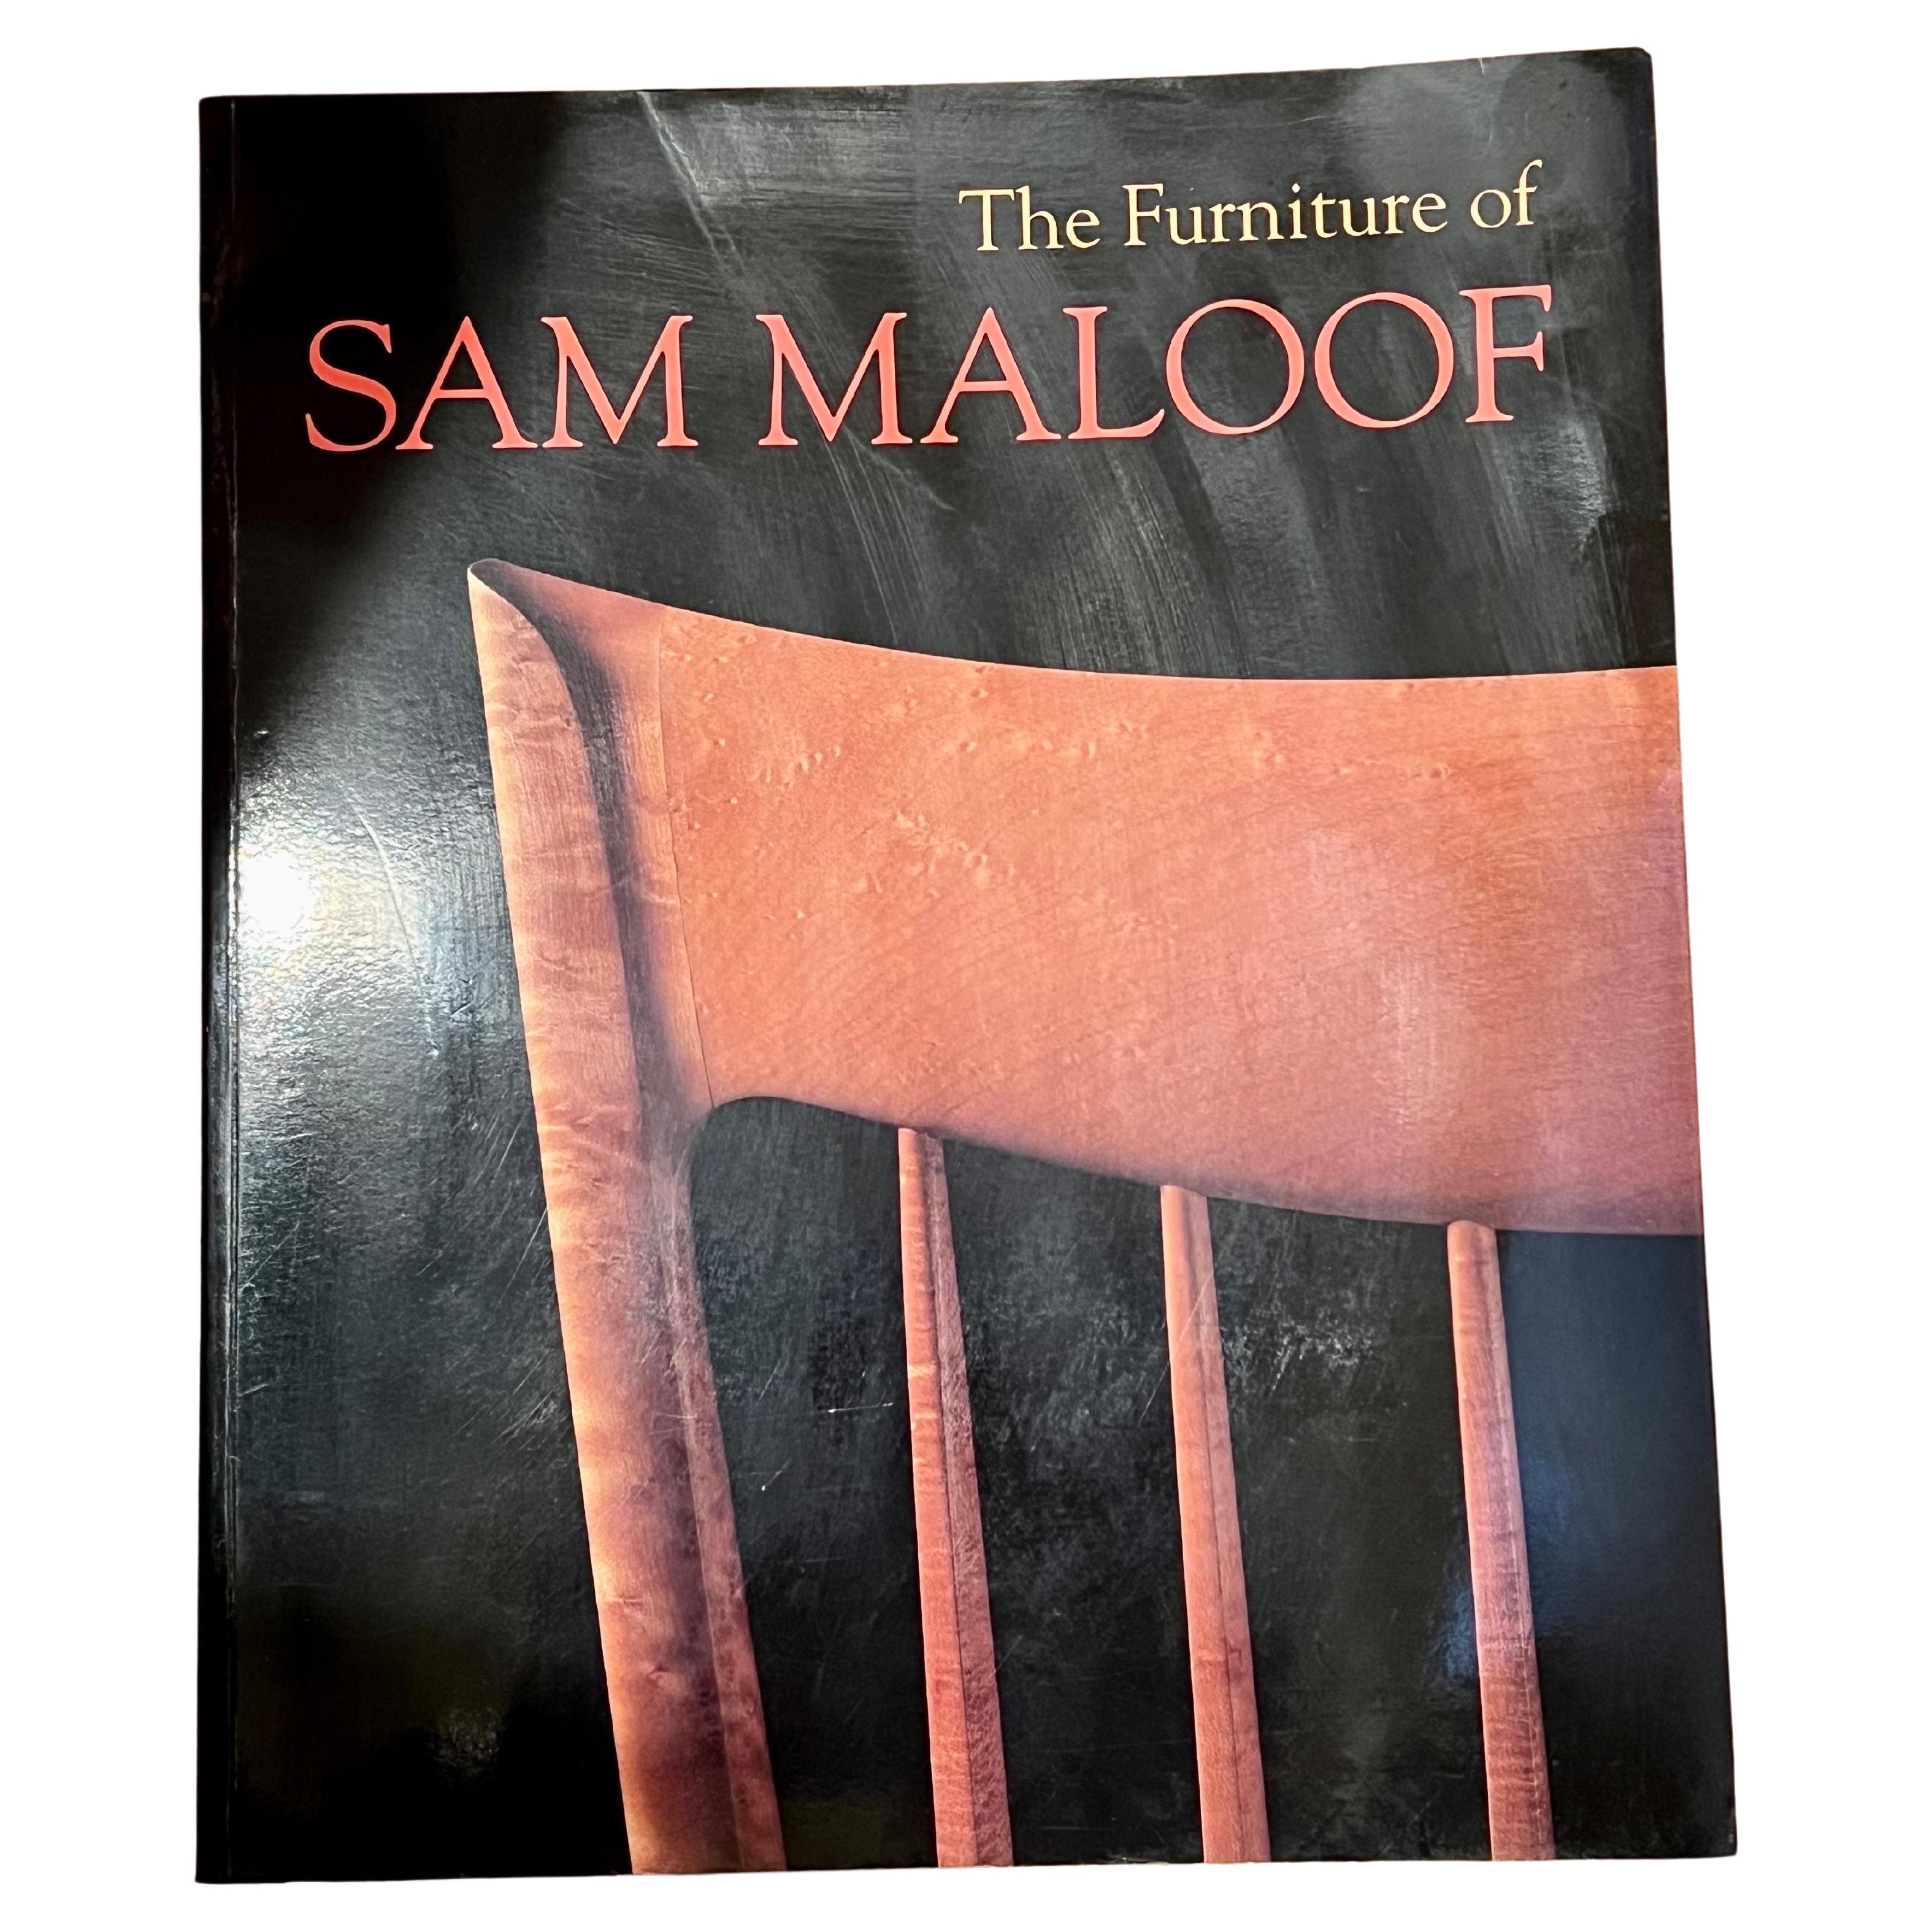 Livre rare signé et daté de Sam Maloof Furniture